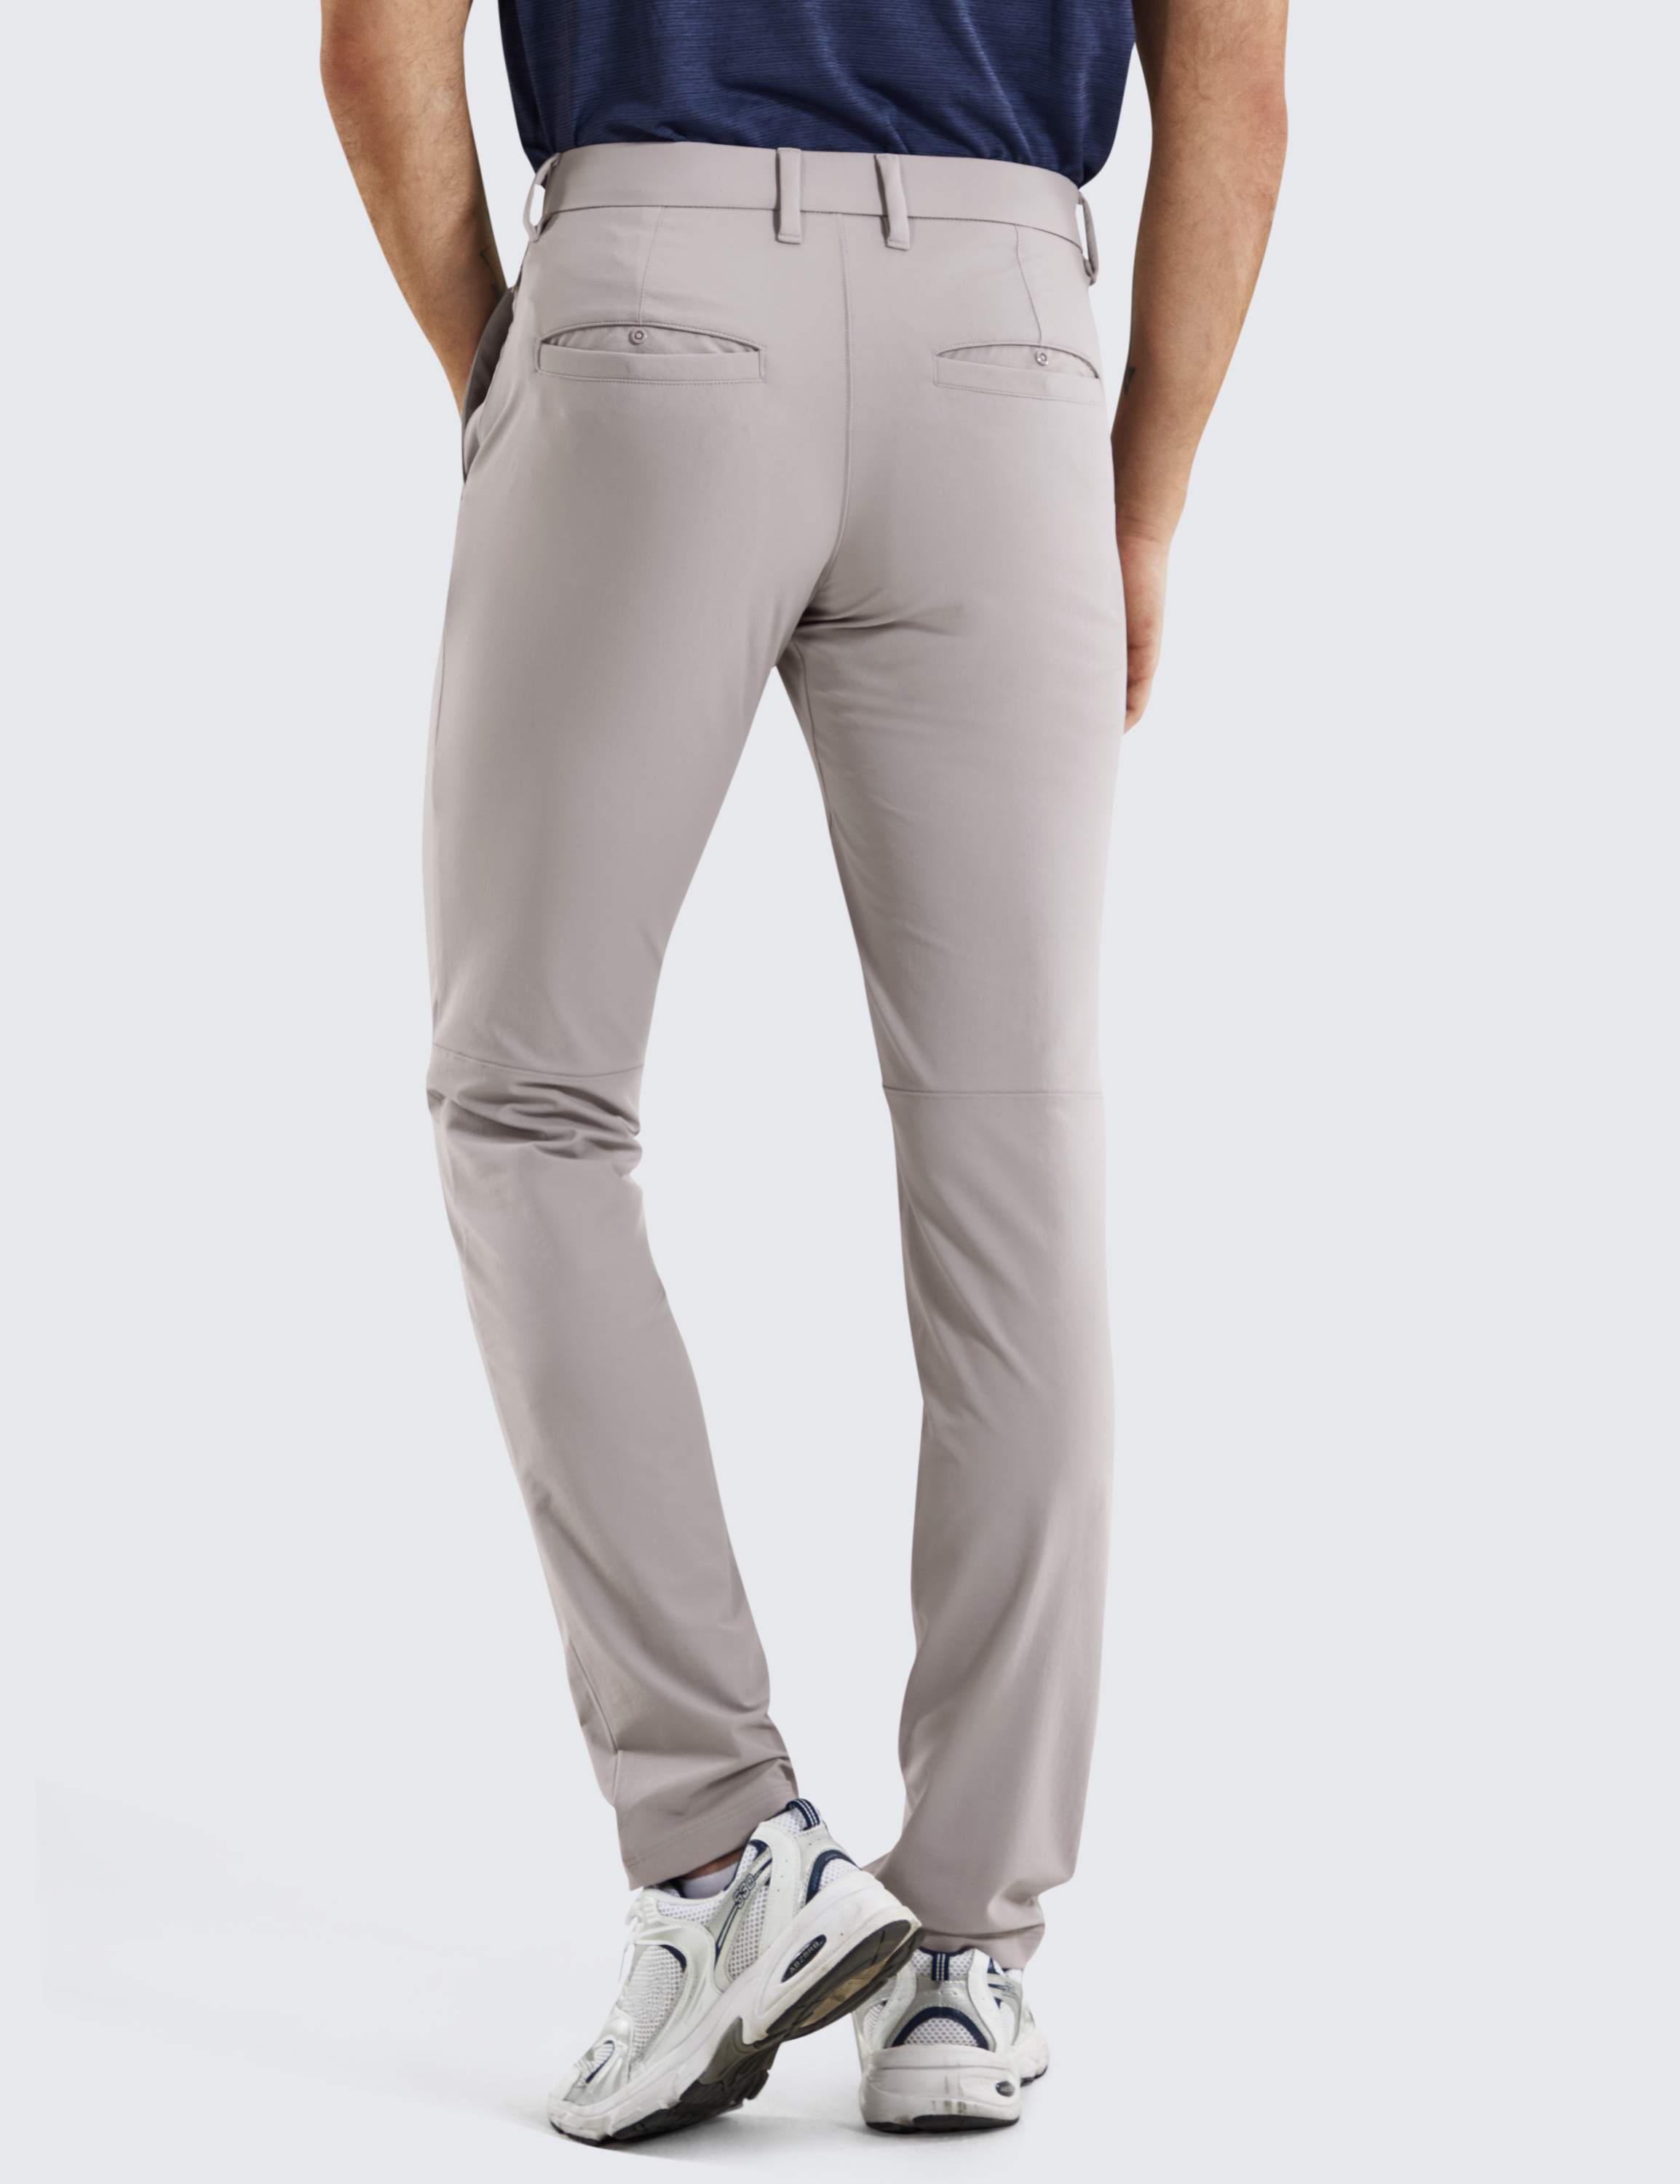 CRZ YOGA Men's Golf Slim Fit Stretch Slim-Fit Pants with Pockets 33